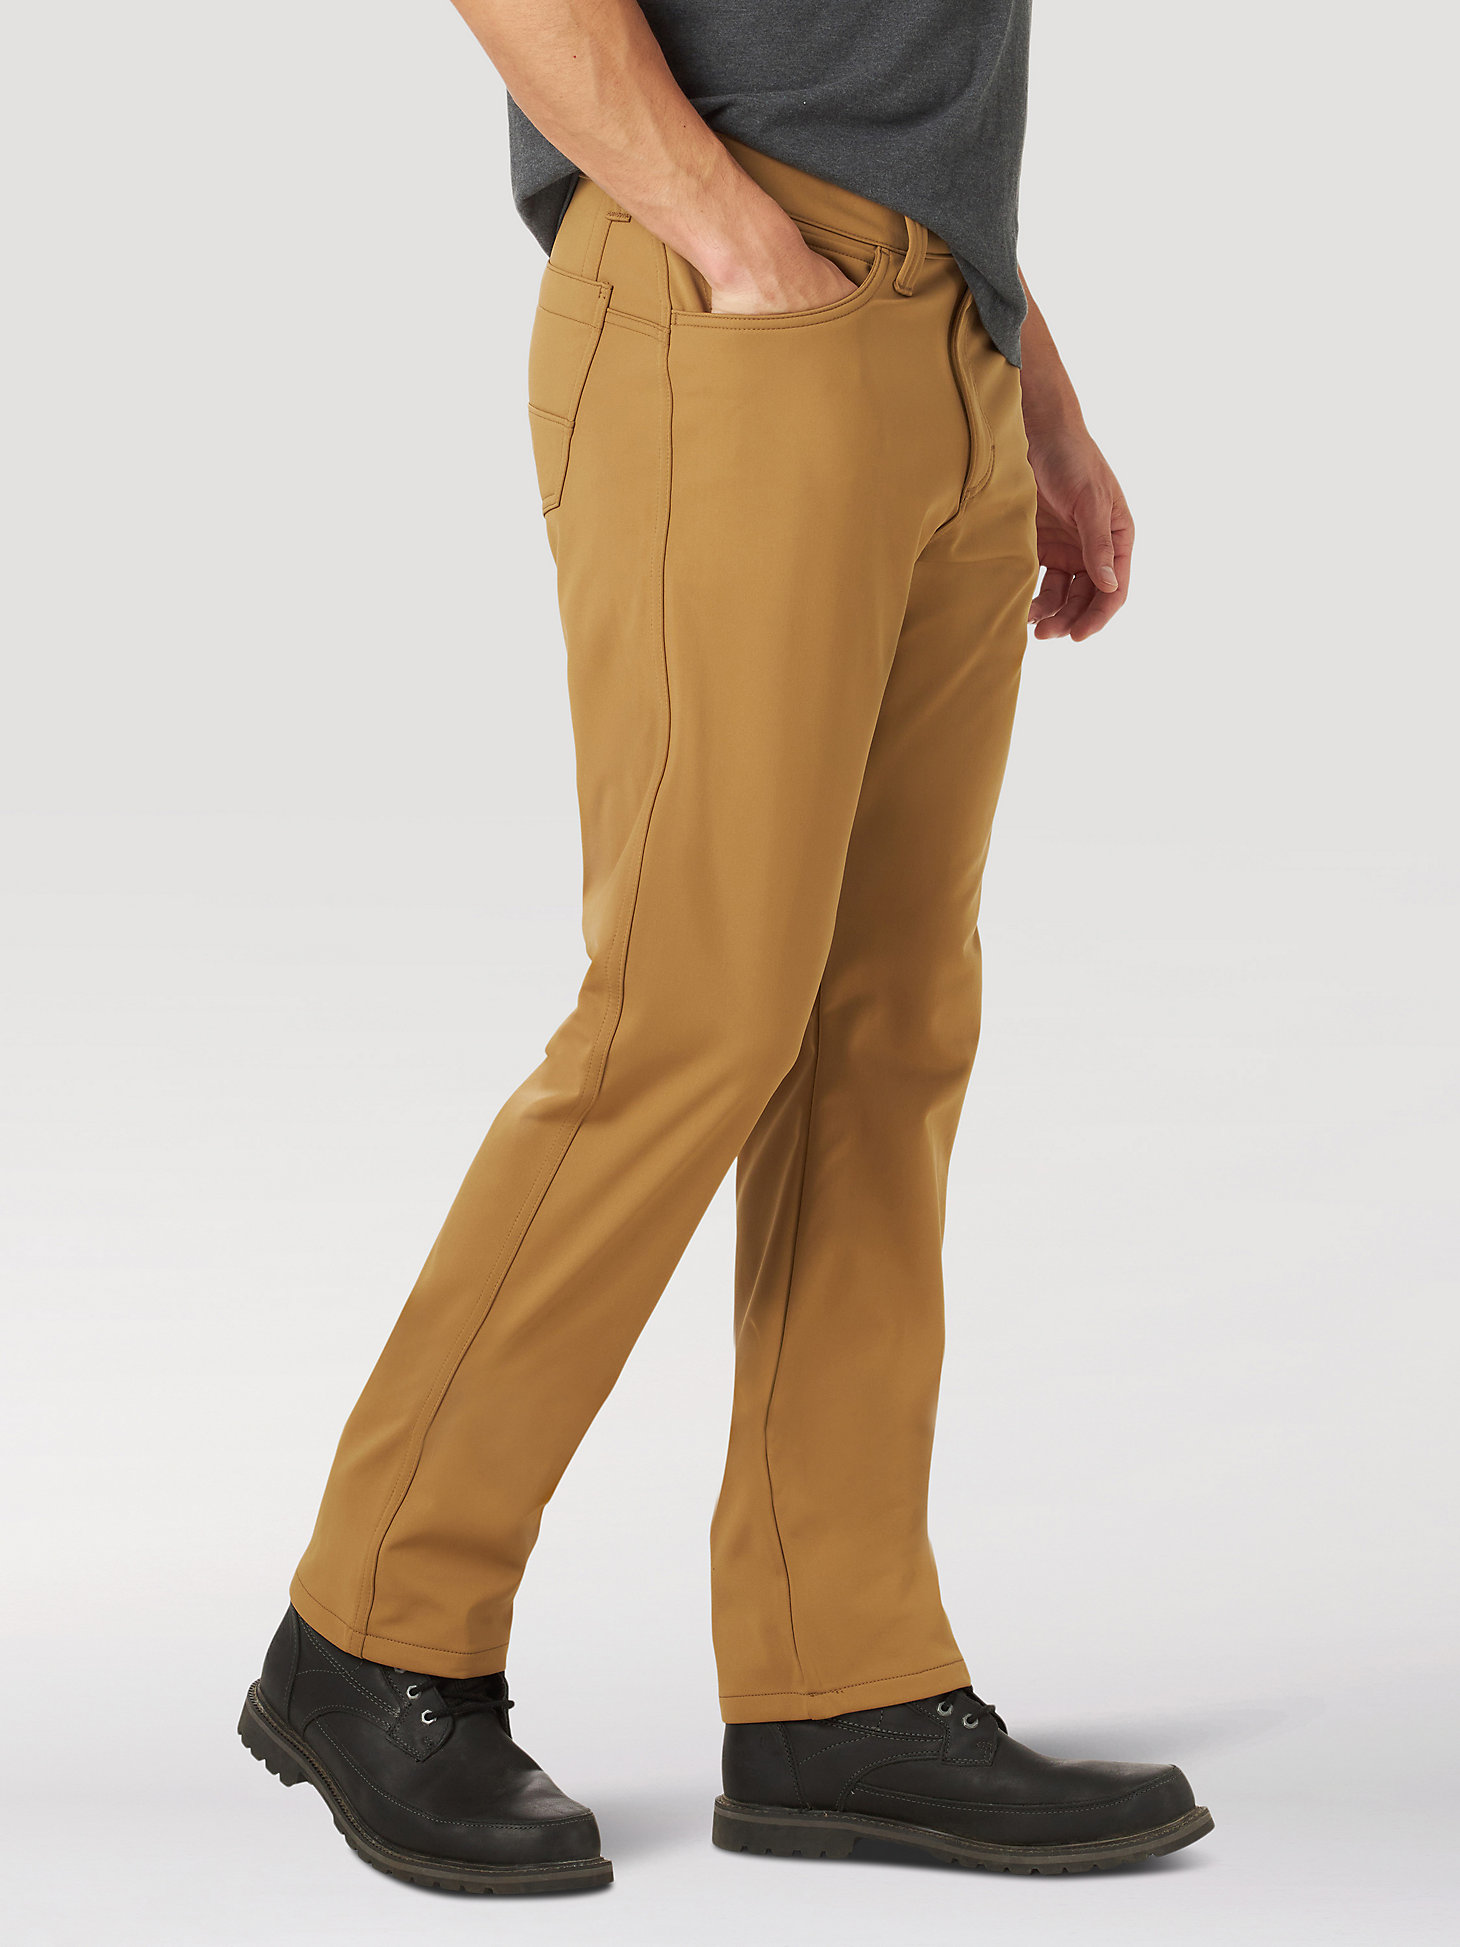 Men's Wrangler® Outdoor Single Layer Warming Pant in Ermine alternative view 3